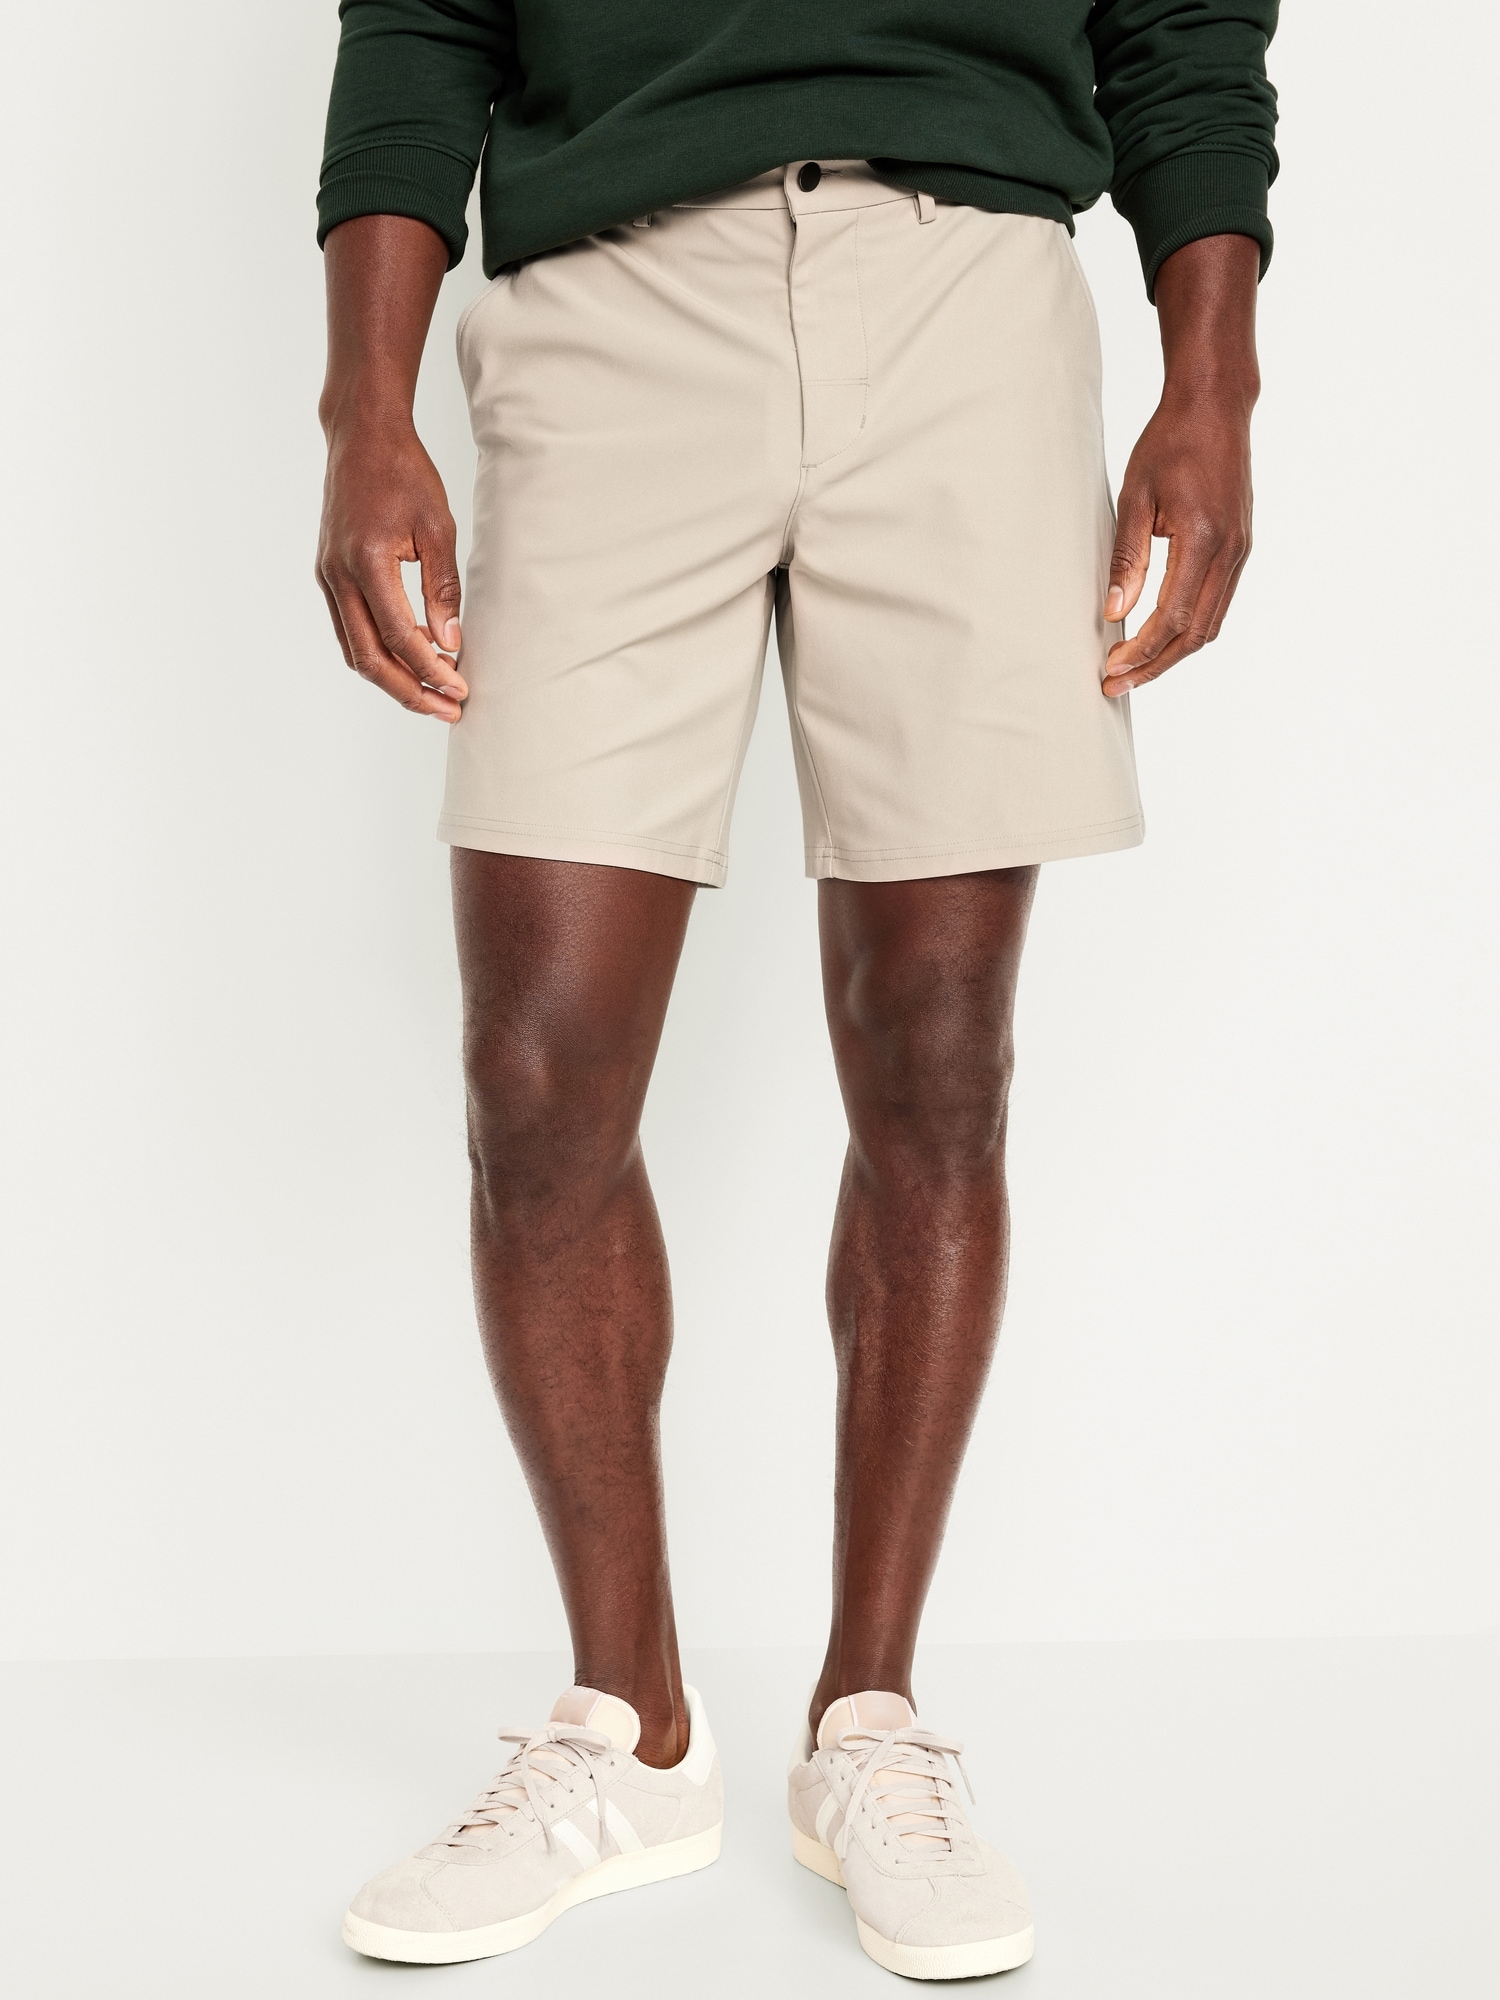 Tech Hybrid Chino Shorts - 8-inch inseam